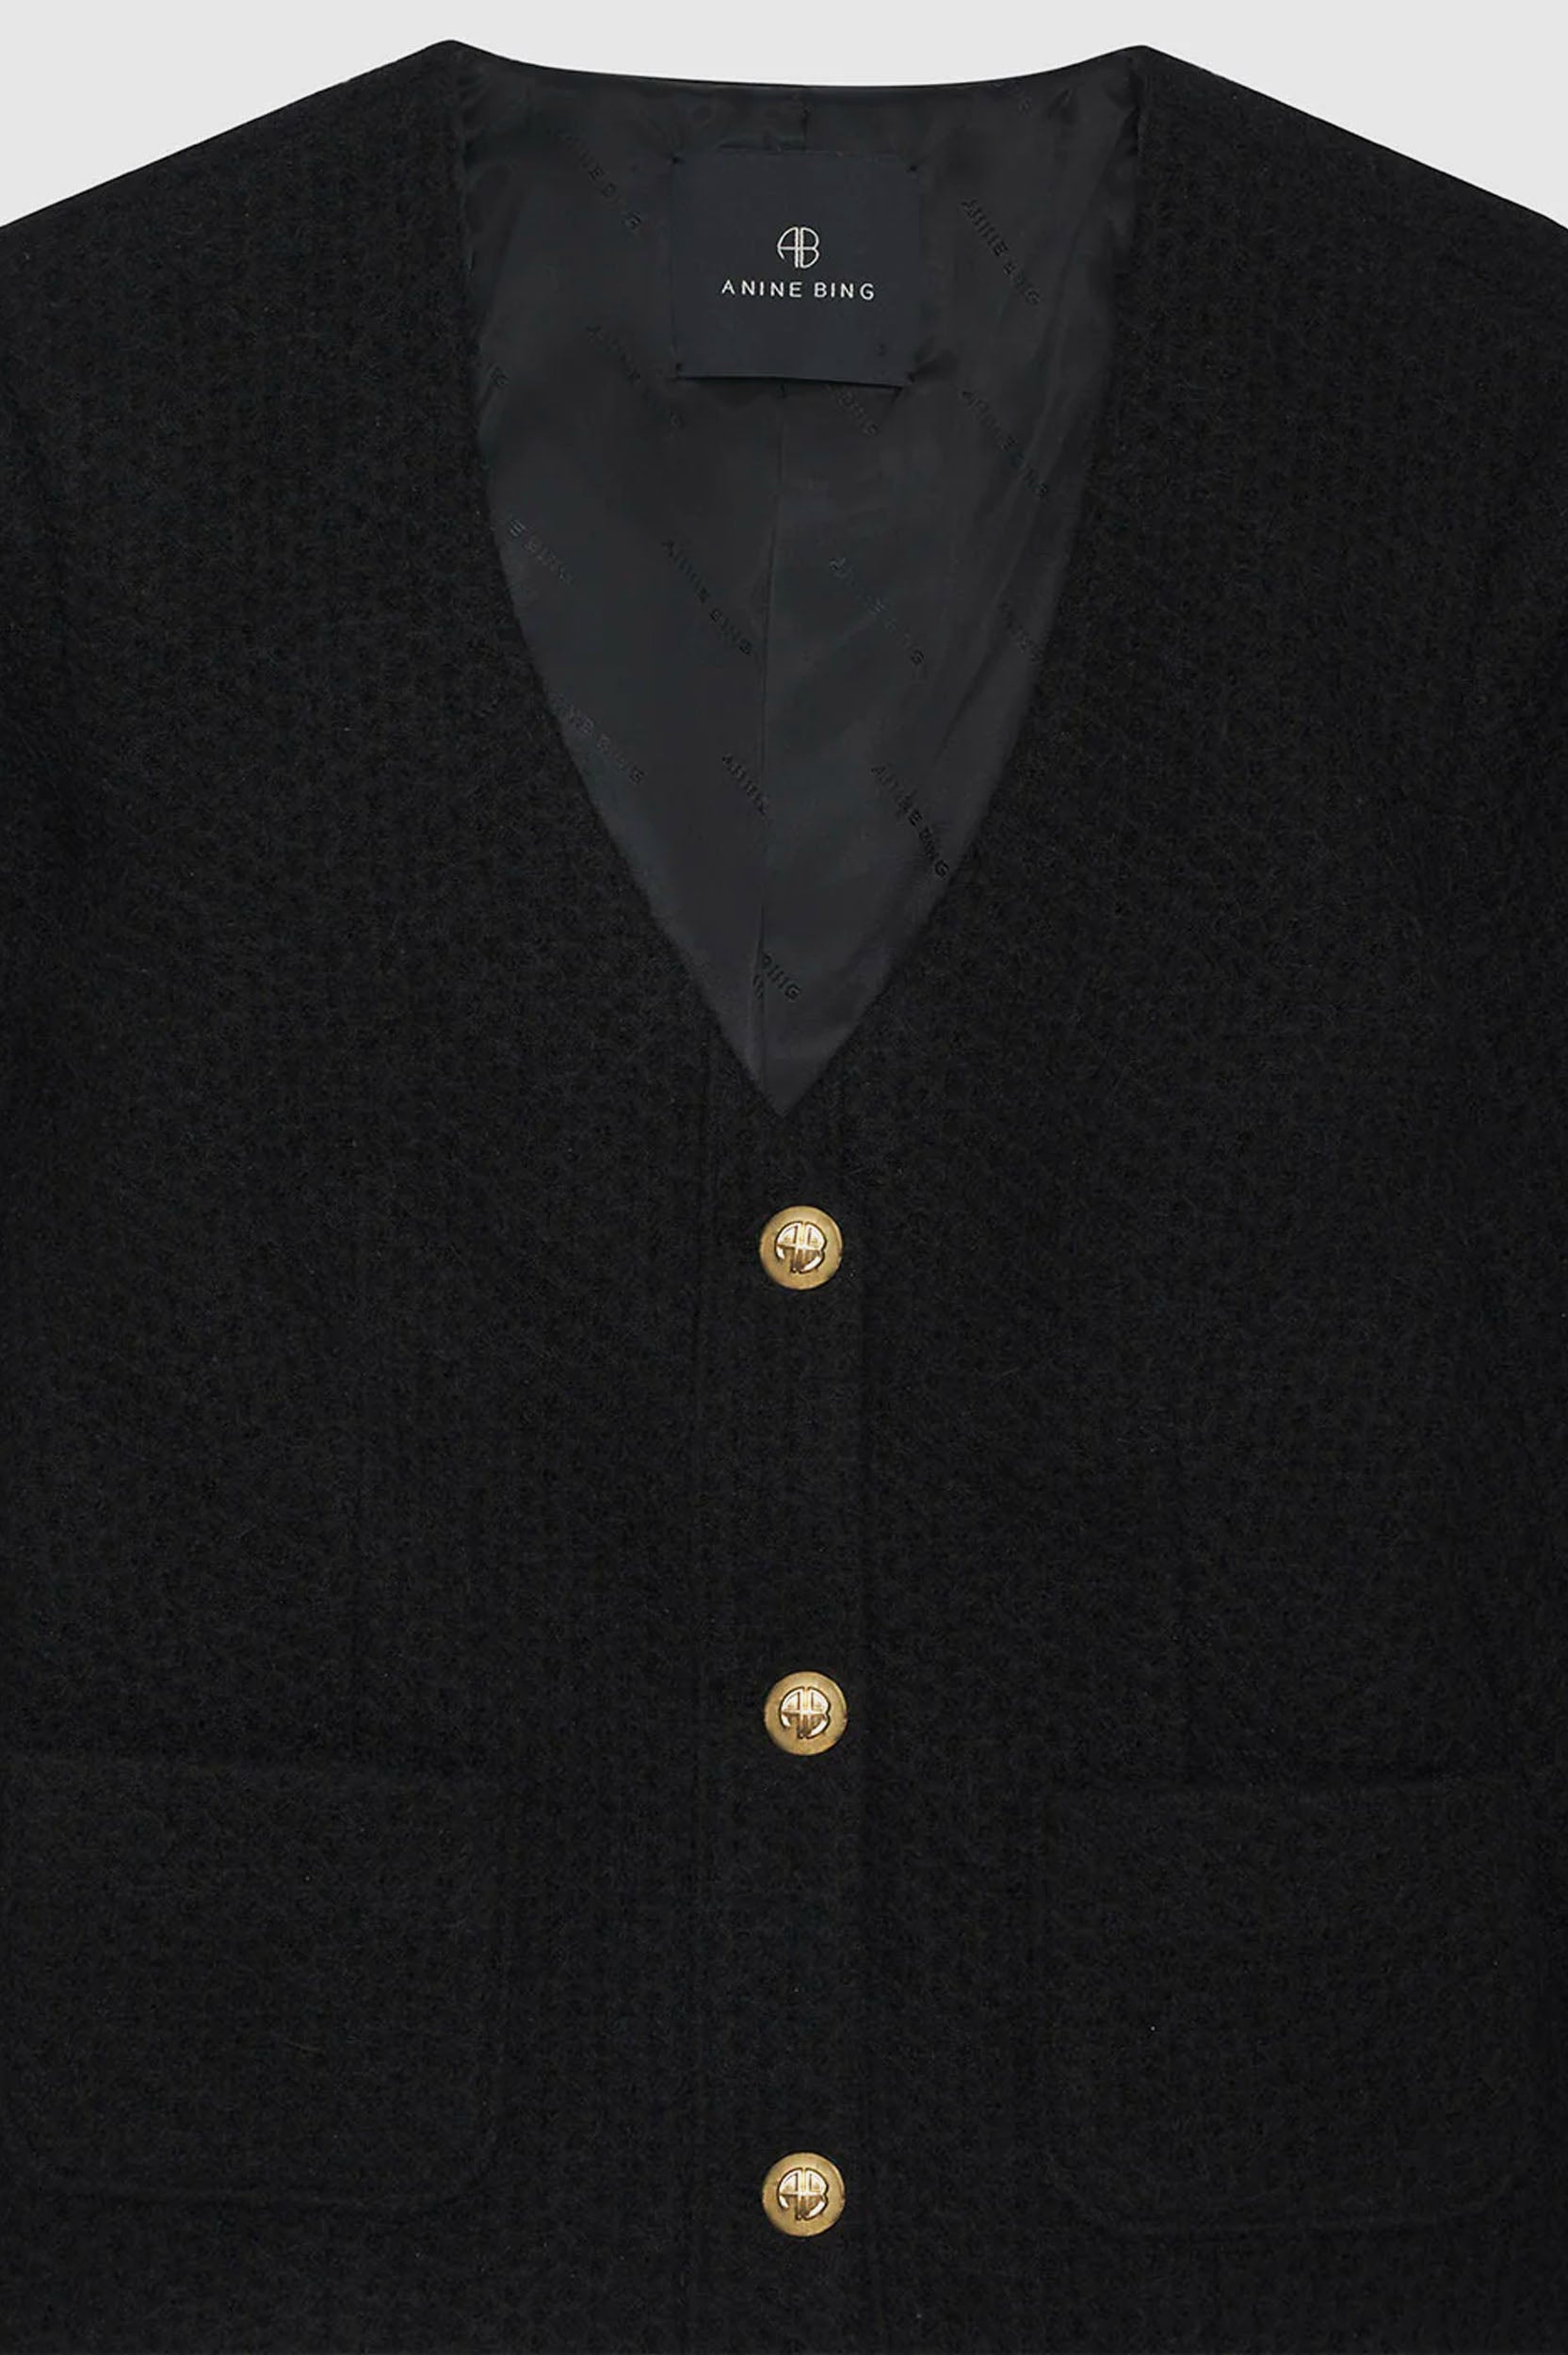 Anitta Jacket in Black Woven